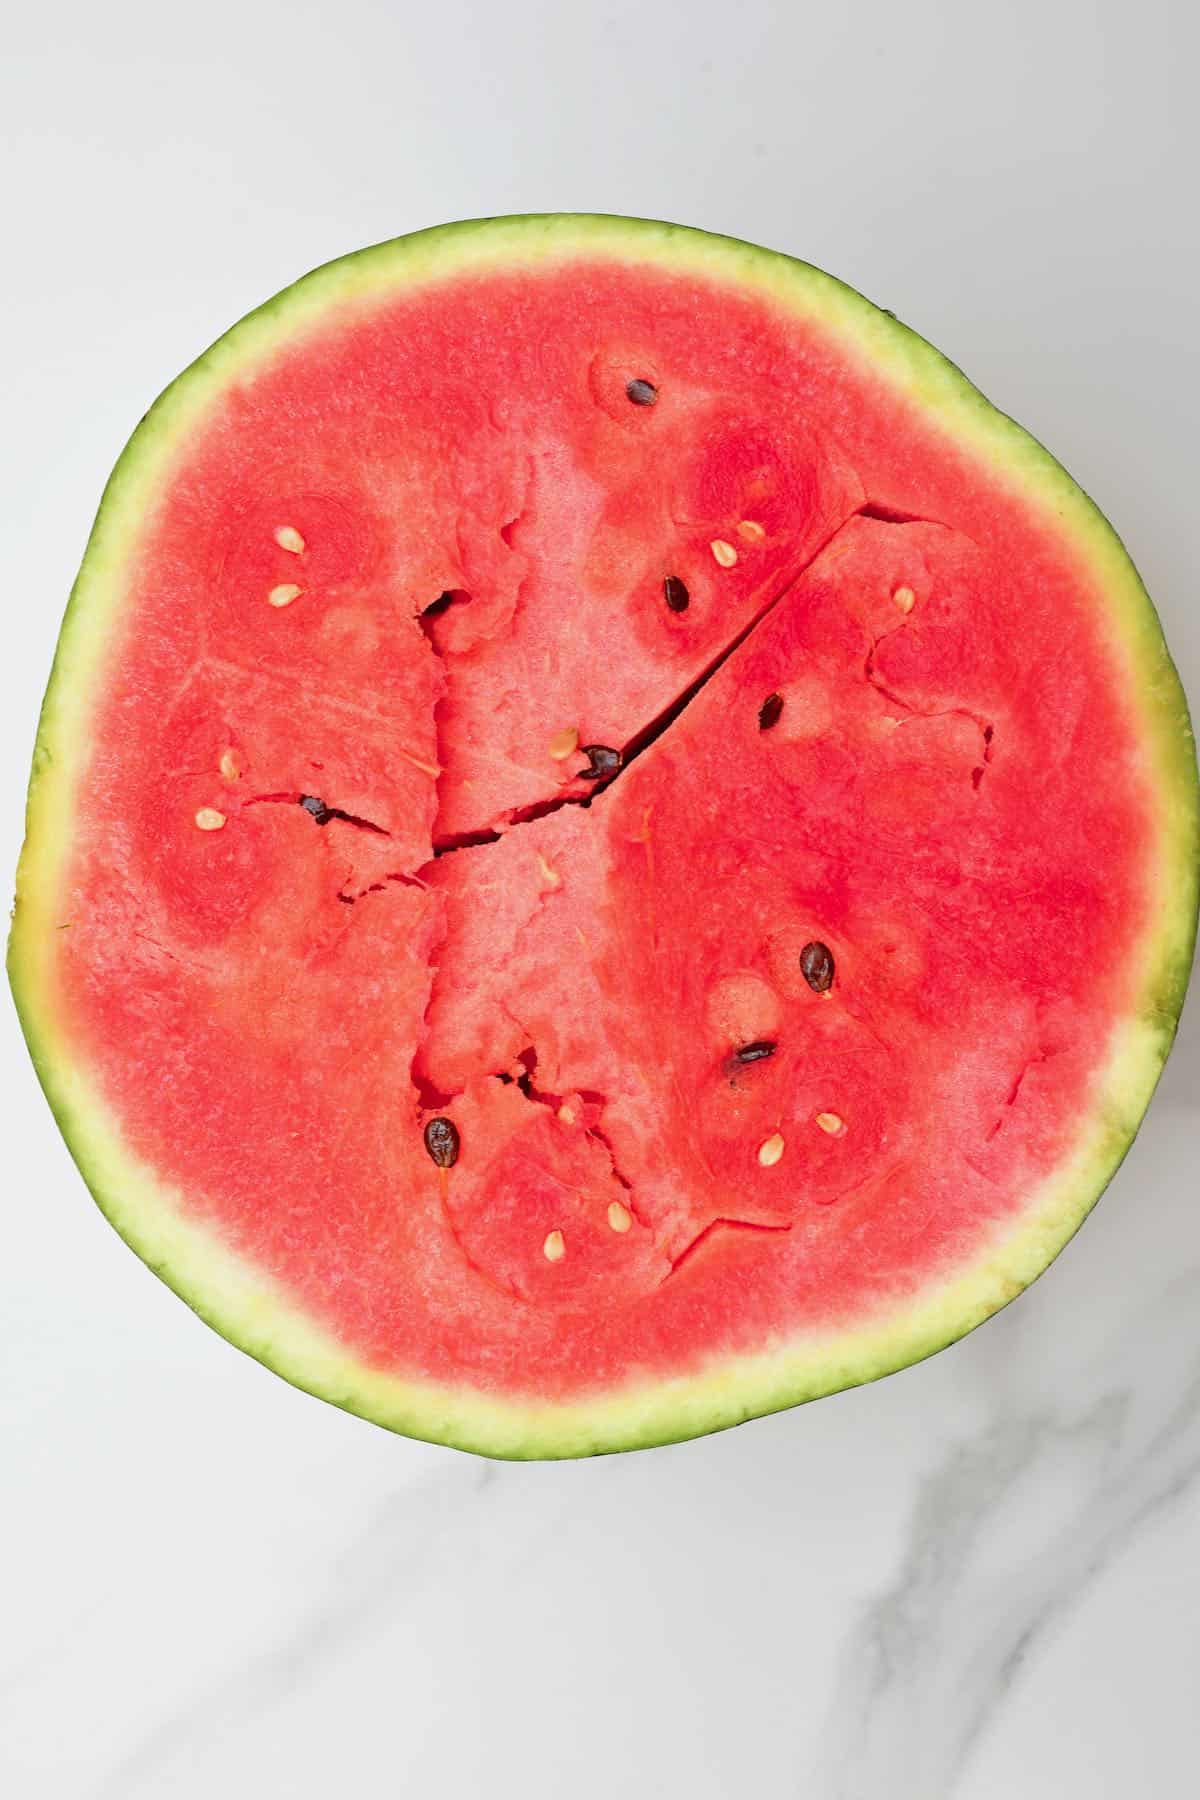 A half of a watermelon